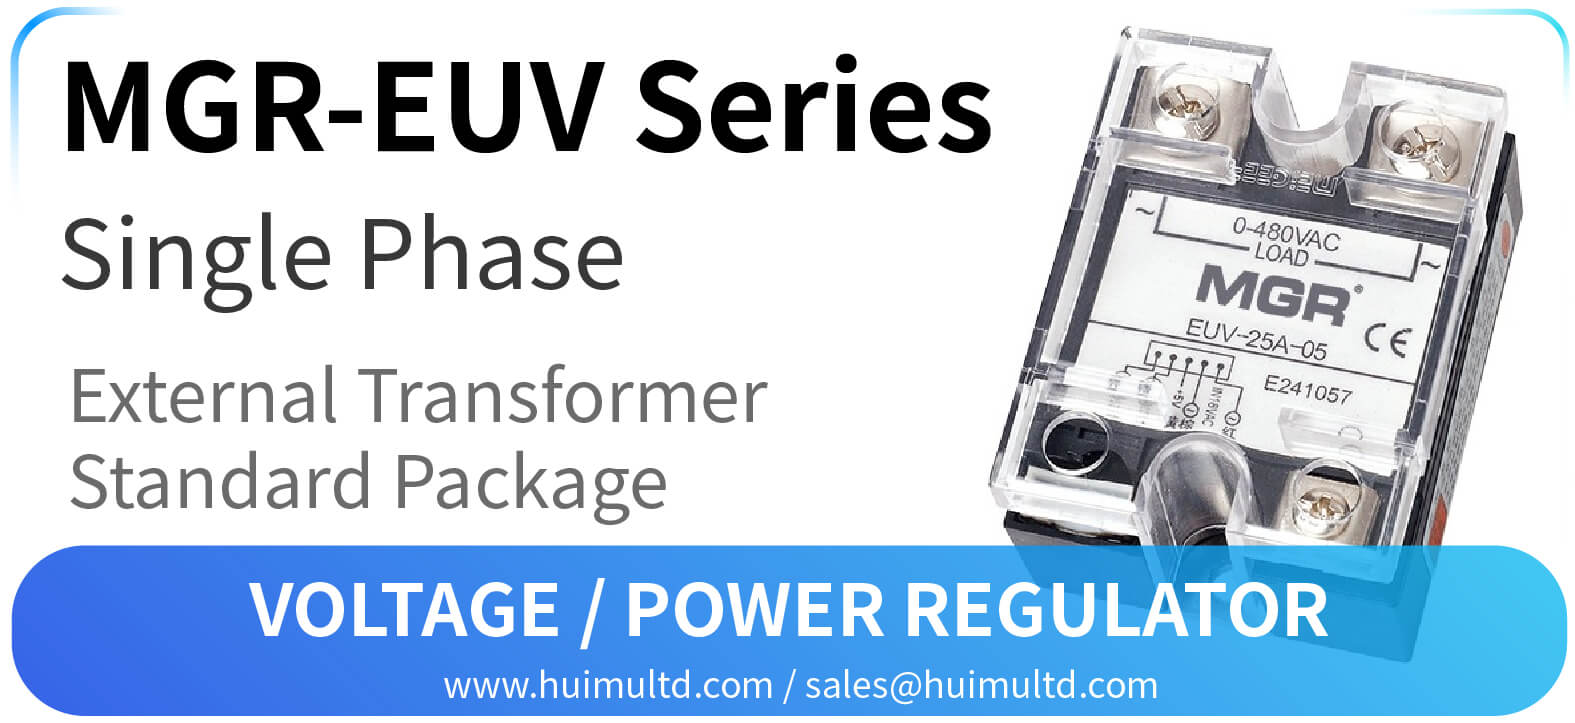 MGR-EUV Series Voltage Power Regulator